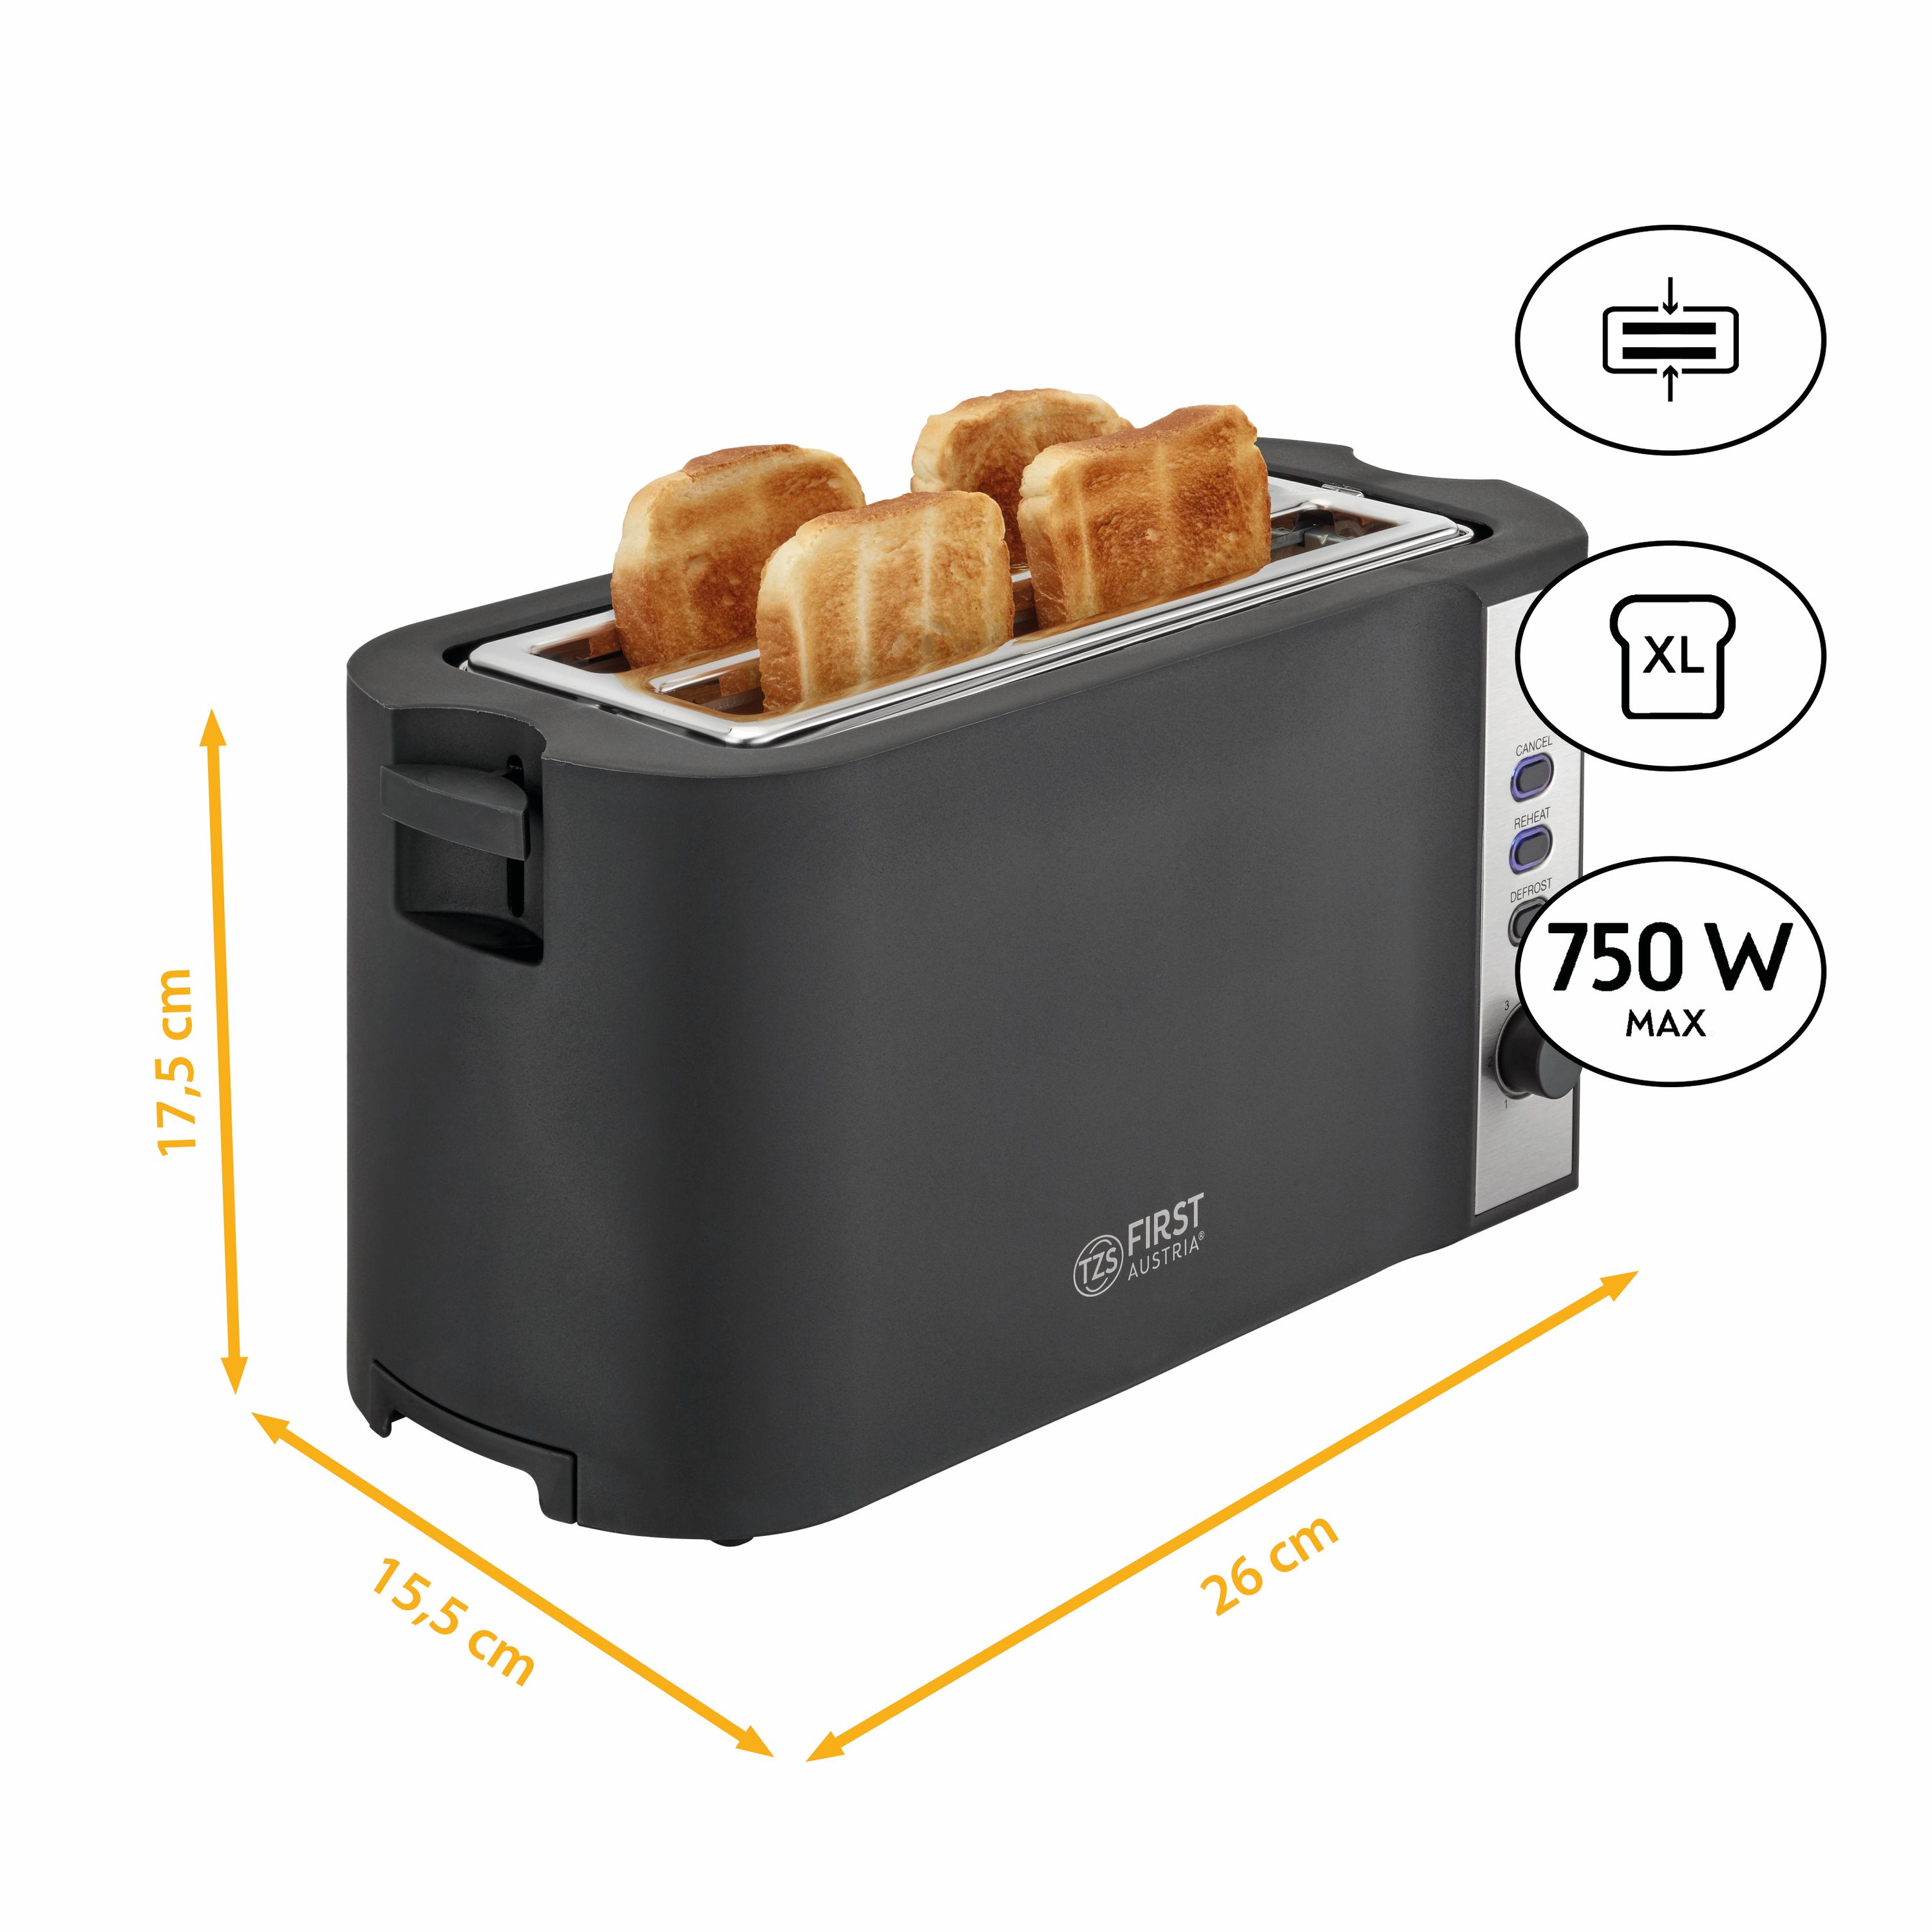 TZS 50 Schlitze: FA-5369-4 FIRST AUSTRIA Watt, 2) Toaster (750